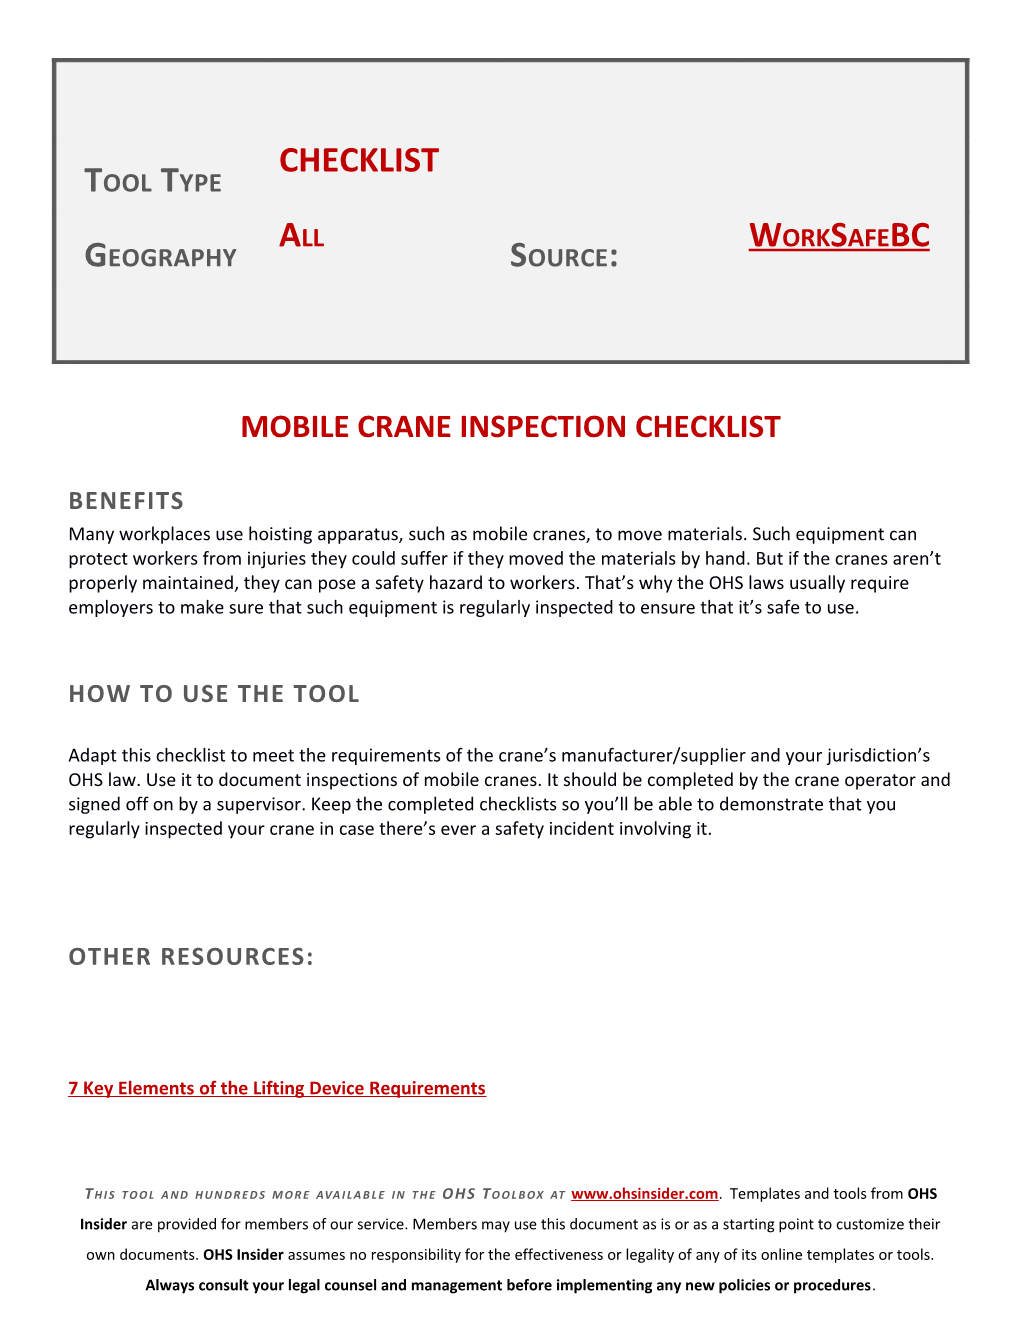 Mobile Crane Inspection Checklist